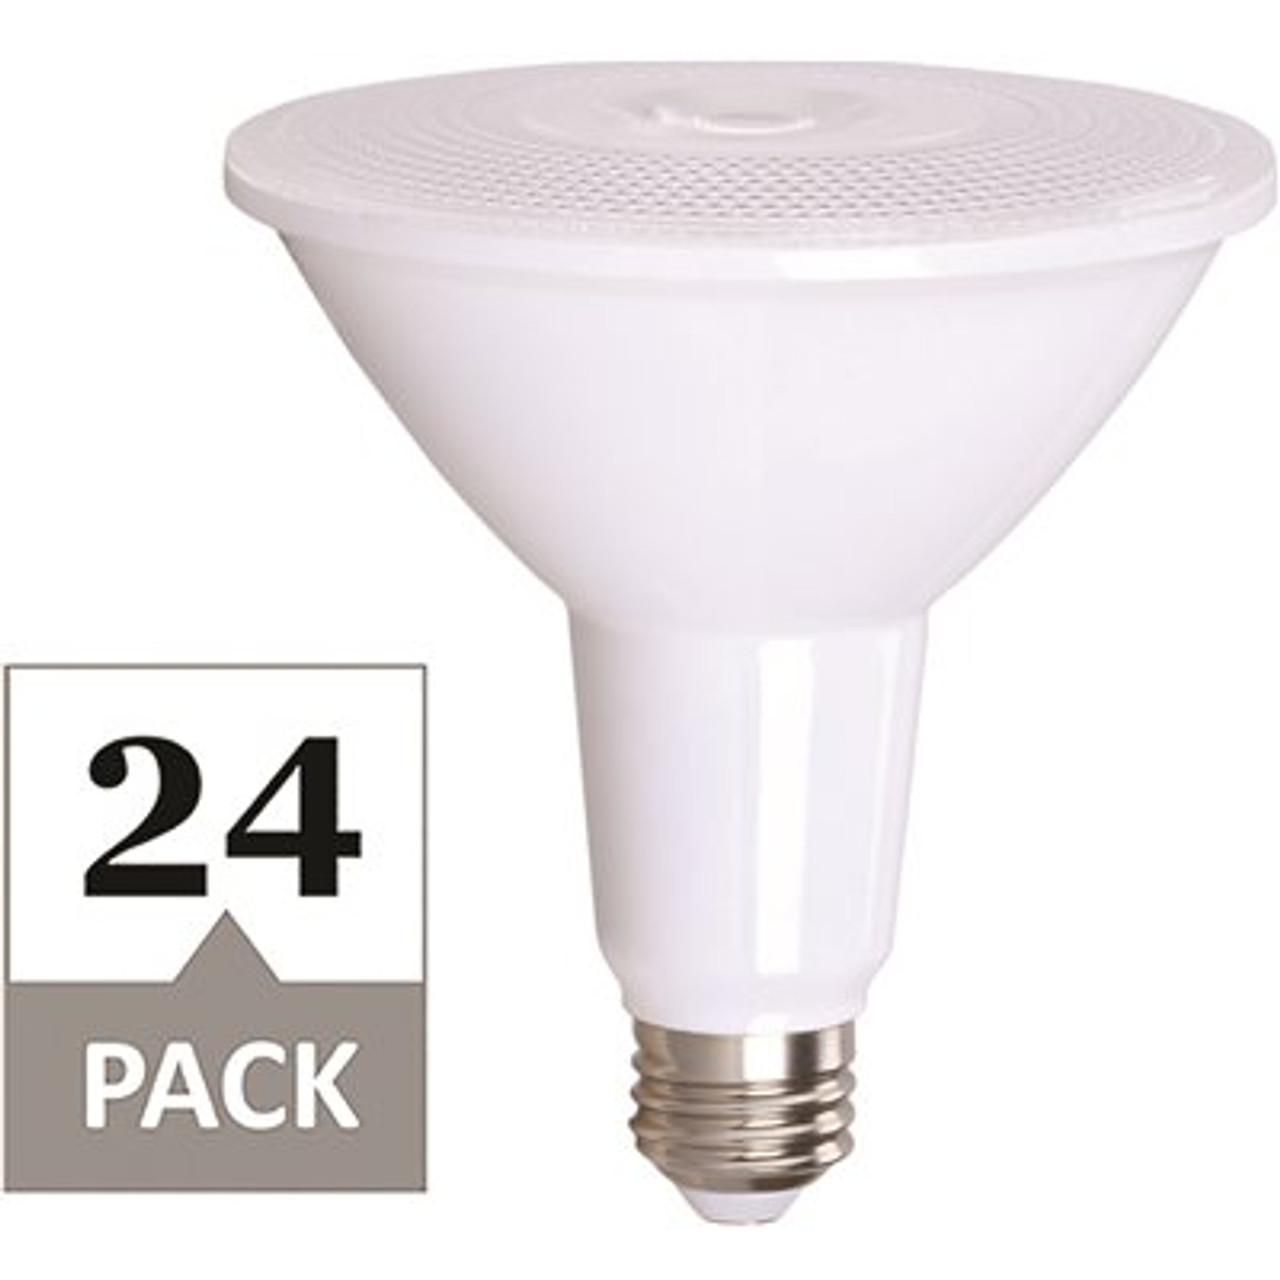 Simply Conserve 120-Watt Equivalent Par38 Dimmable Energy Star LED Light Bulb Bright White (5000K) (24-Pack)